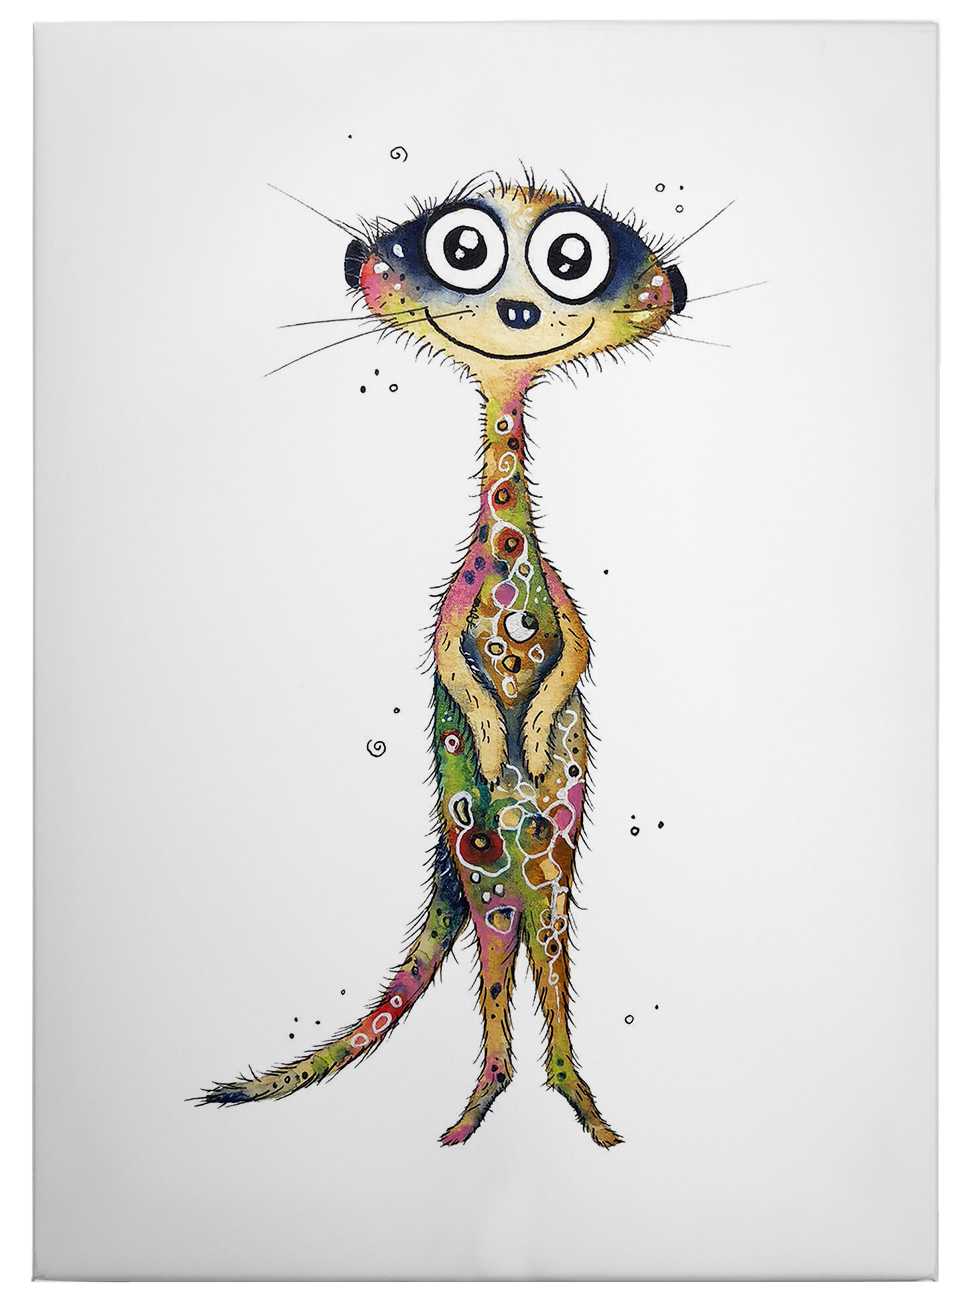             Canvas print meerkat watercolour by Hagenmeyer
        